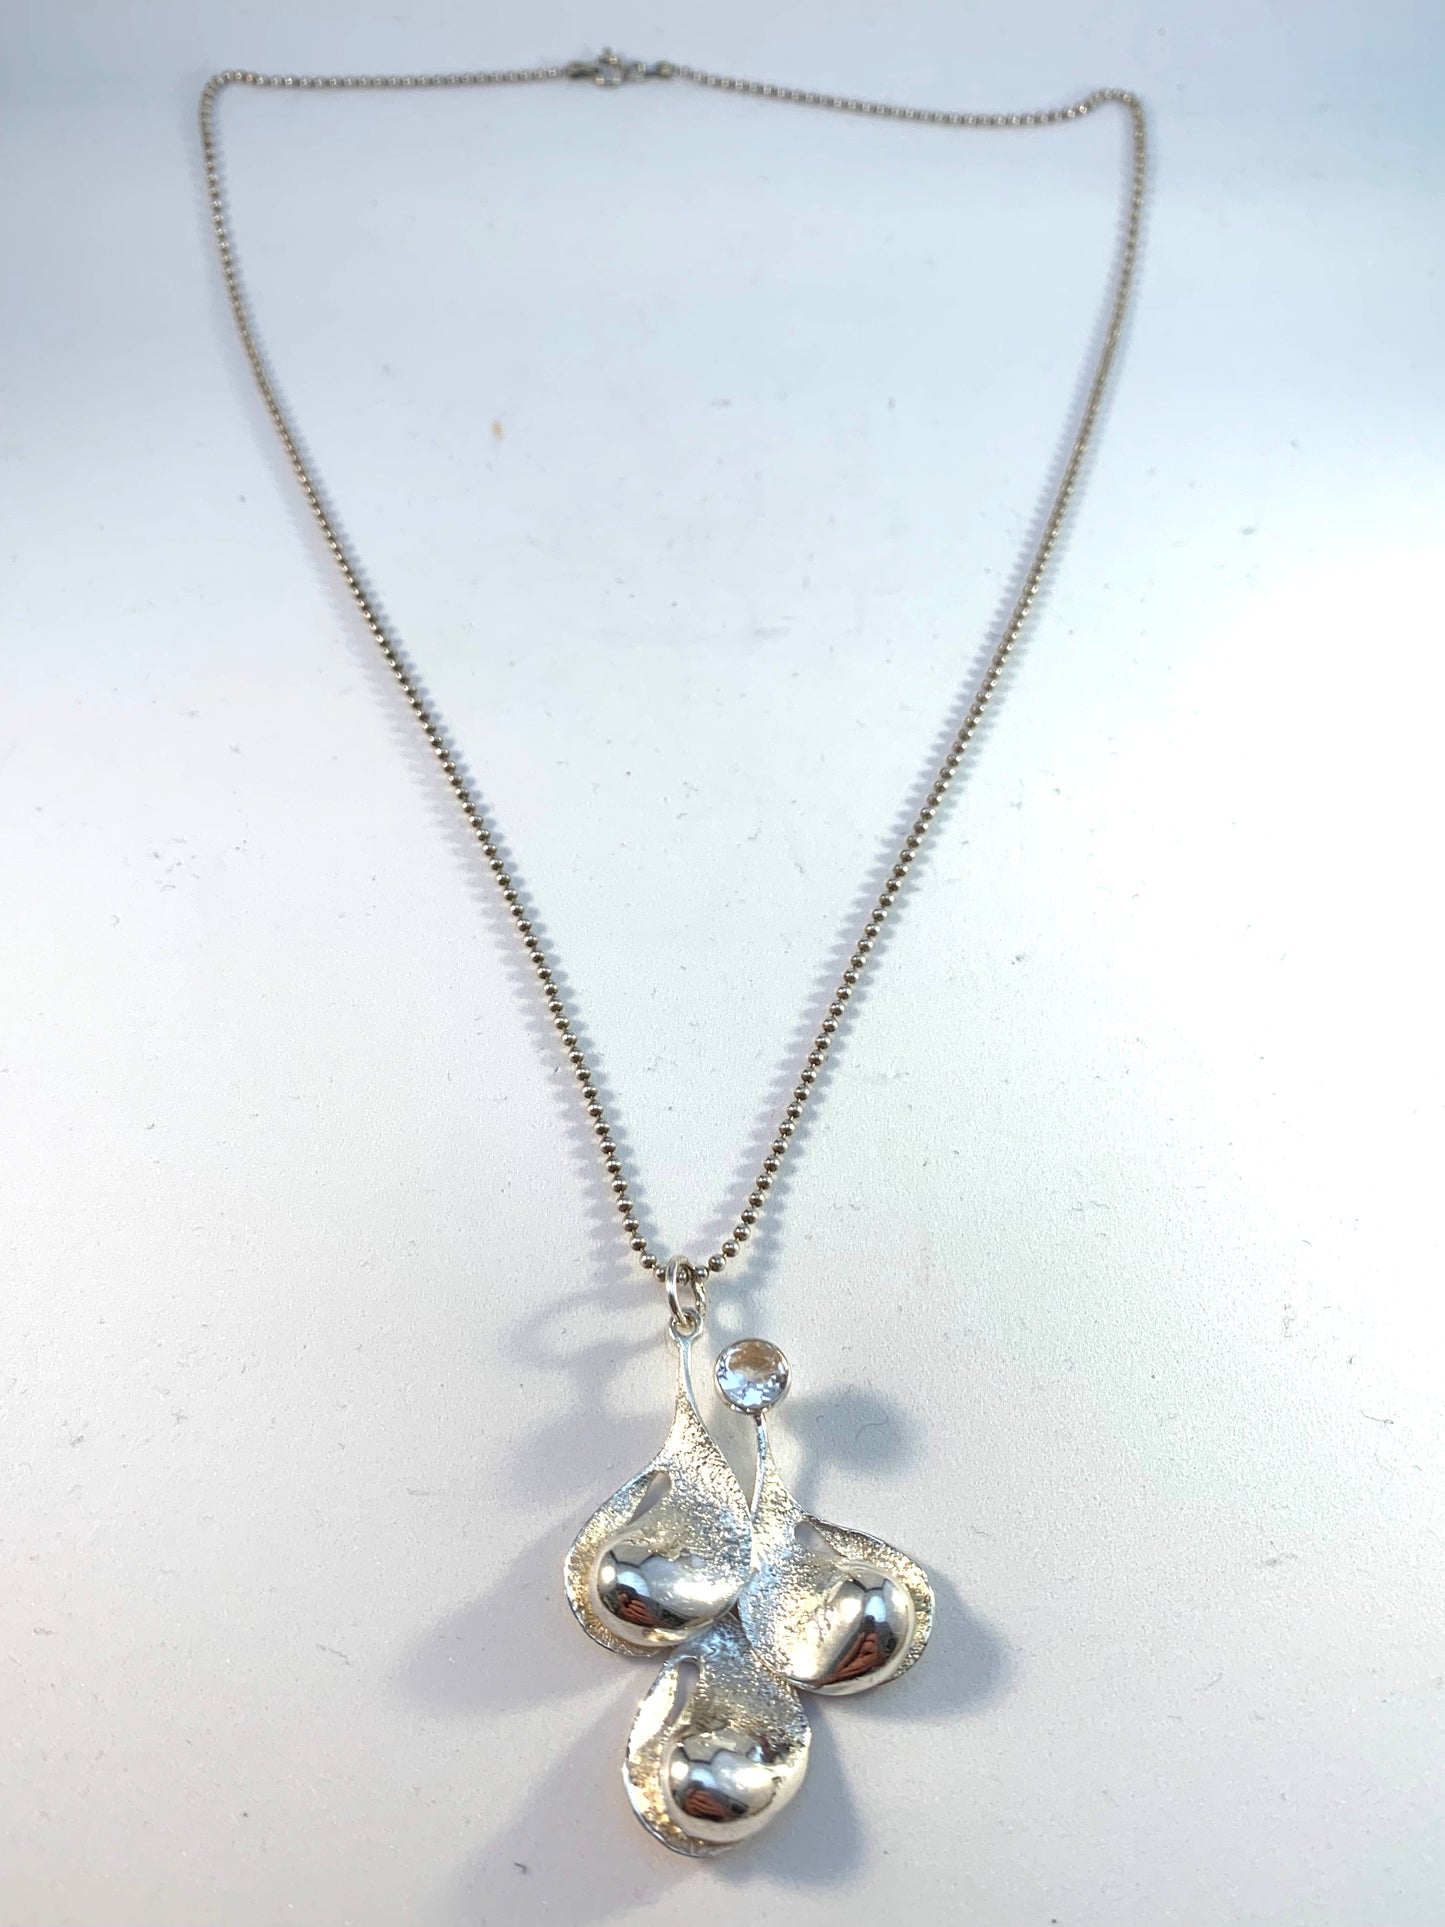 Örneus, Stockholm year 1974 Sterling Silver Rock Crystal Pendant Necklace.